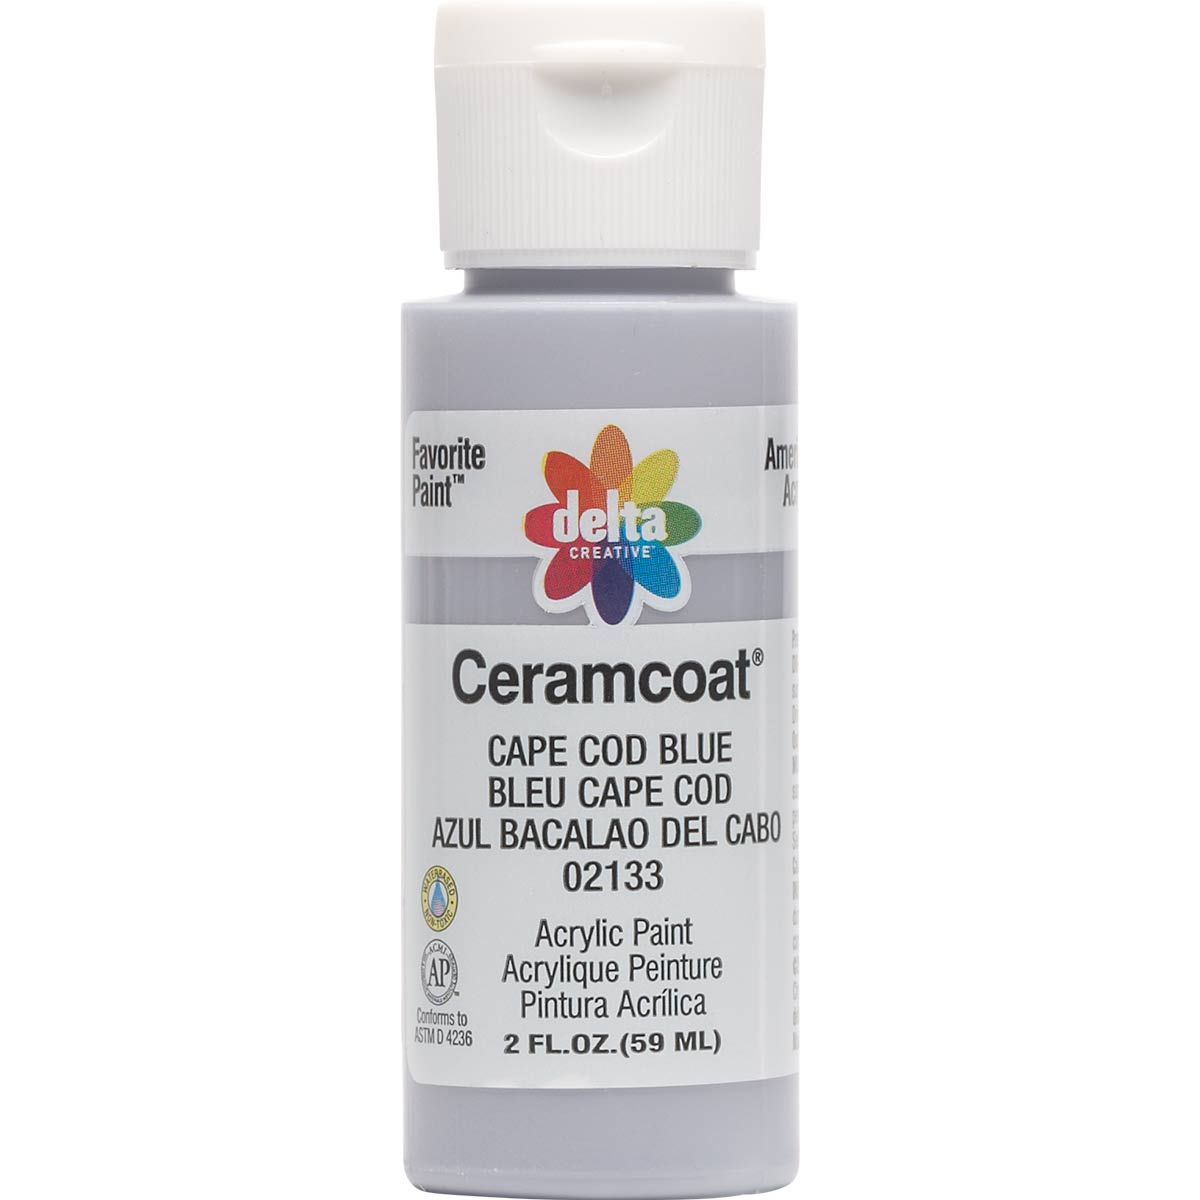 Delta Ceramcoat Acrylic Paint - Cape Cod Blue, 2 oz. - 021330202W